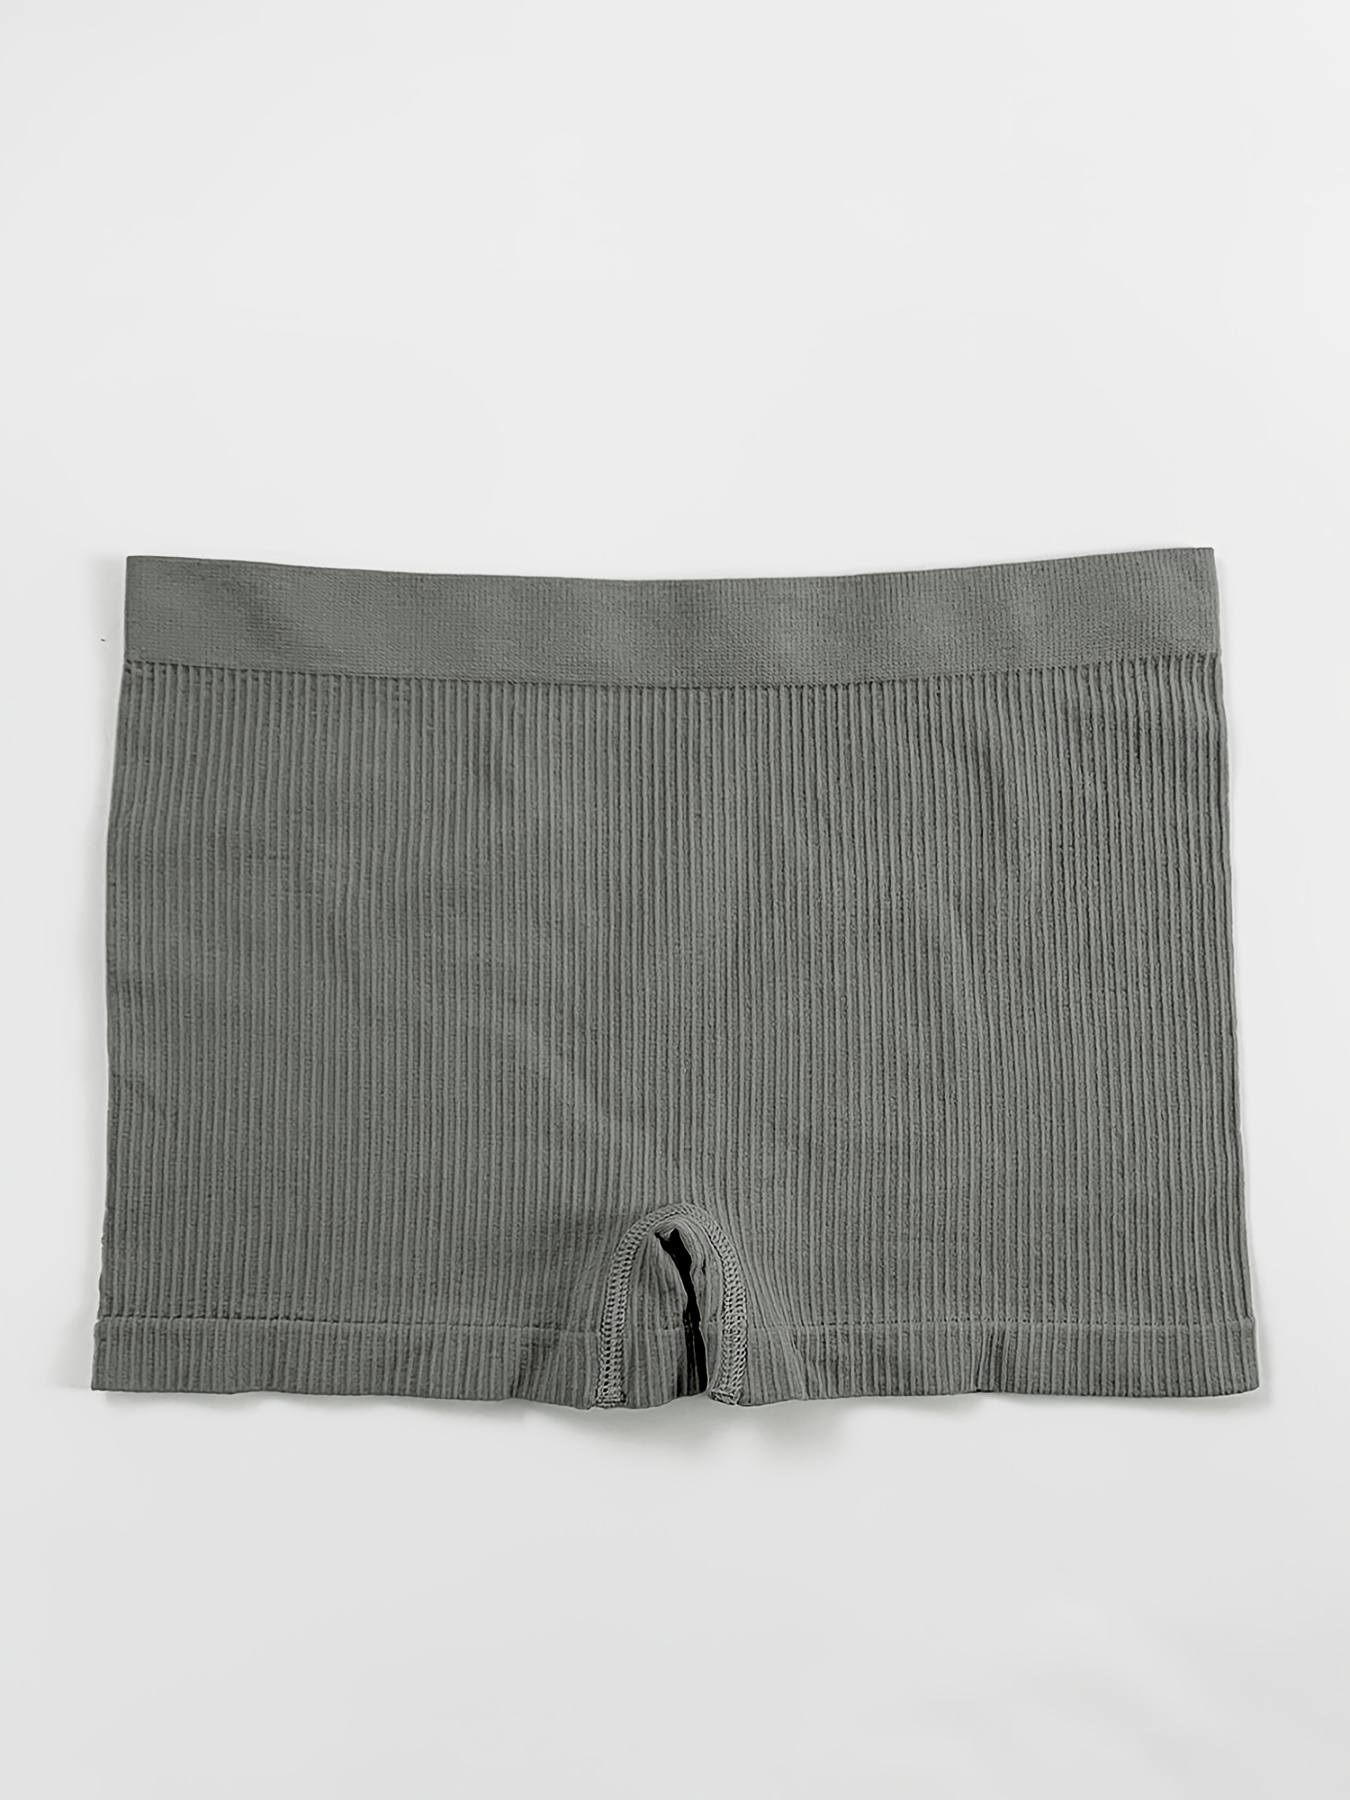 Mid-Rise Rib-Knit Boyshort Underwear